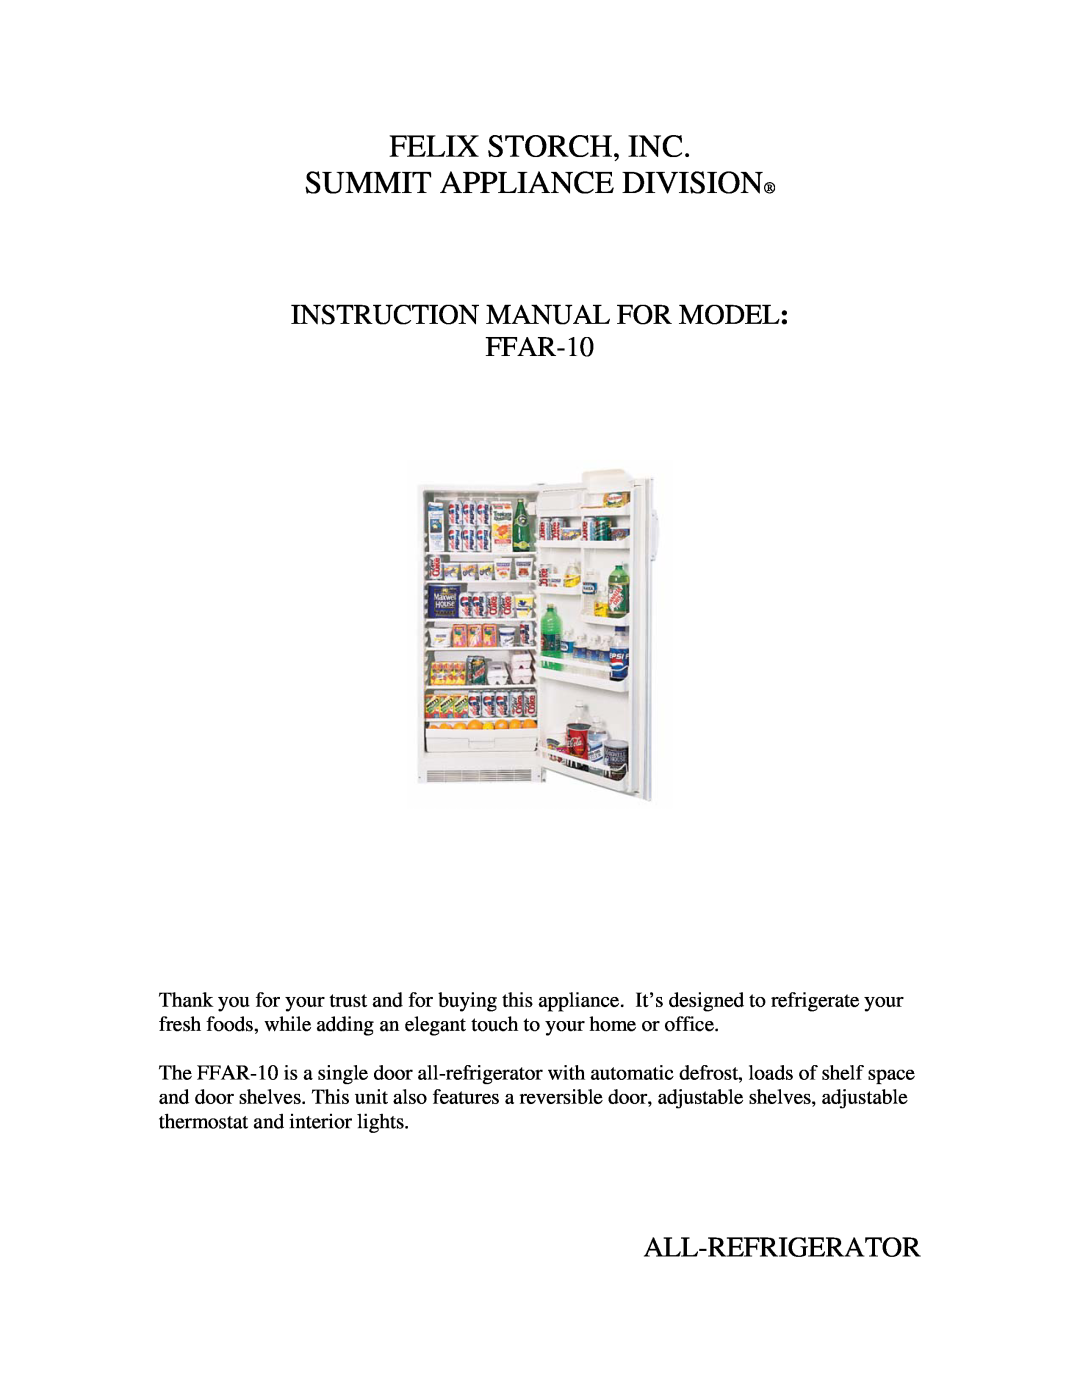 Summit FFAR-10 instruction manual Felix Storch, Inc Summit Appliance Division, All-Refrigerator 